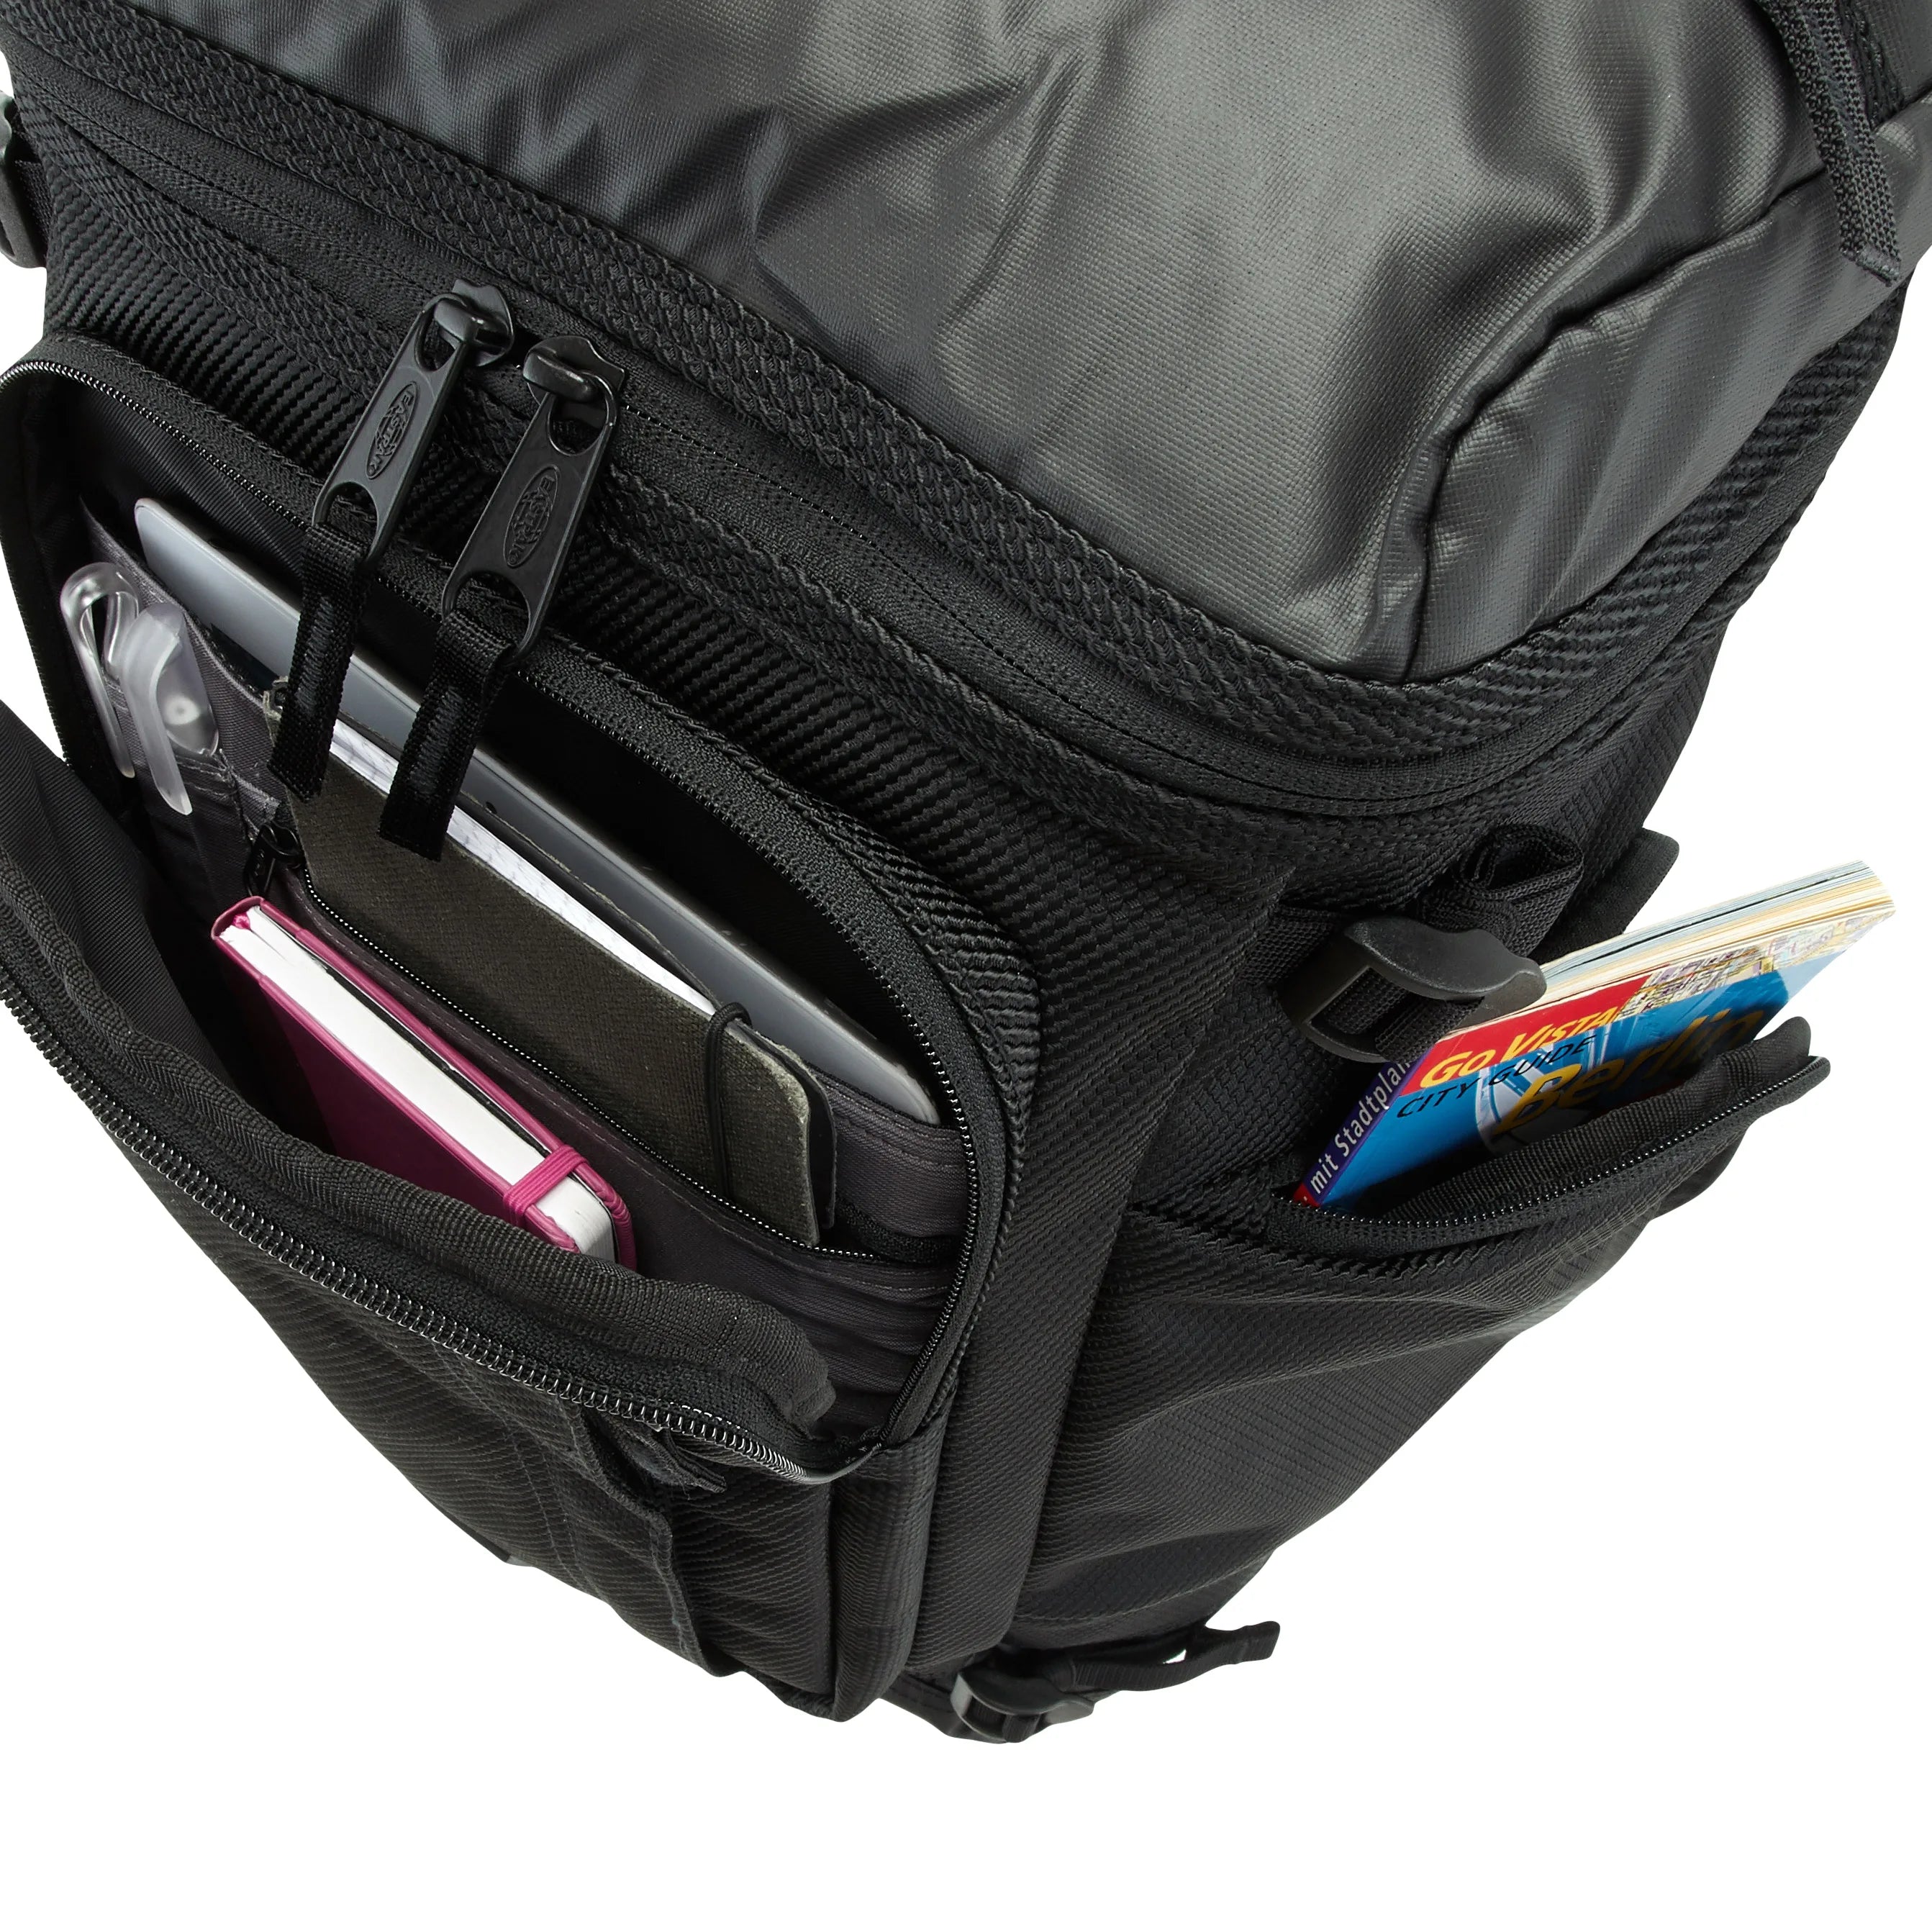 Eastpak Authentic Tecum Top Backpack CNNCT 49 cm - Cnnct Khaki